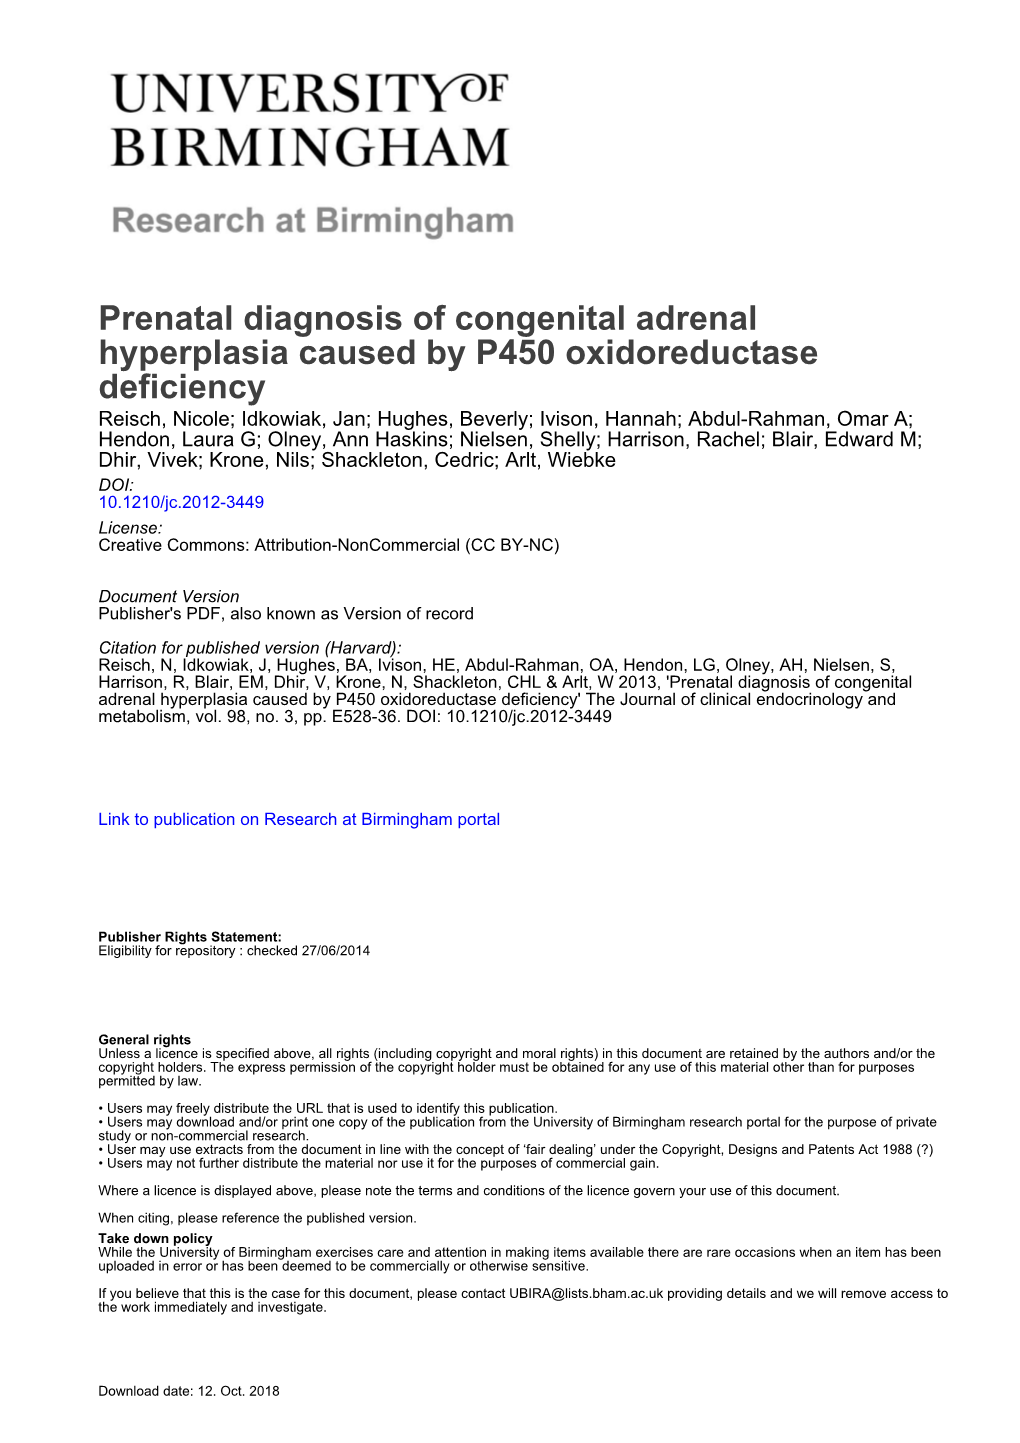 Prenatal Diagnosis of Congenital Adrenal